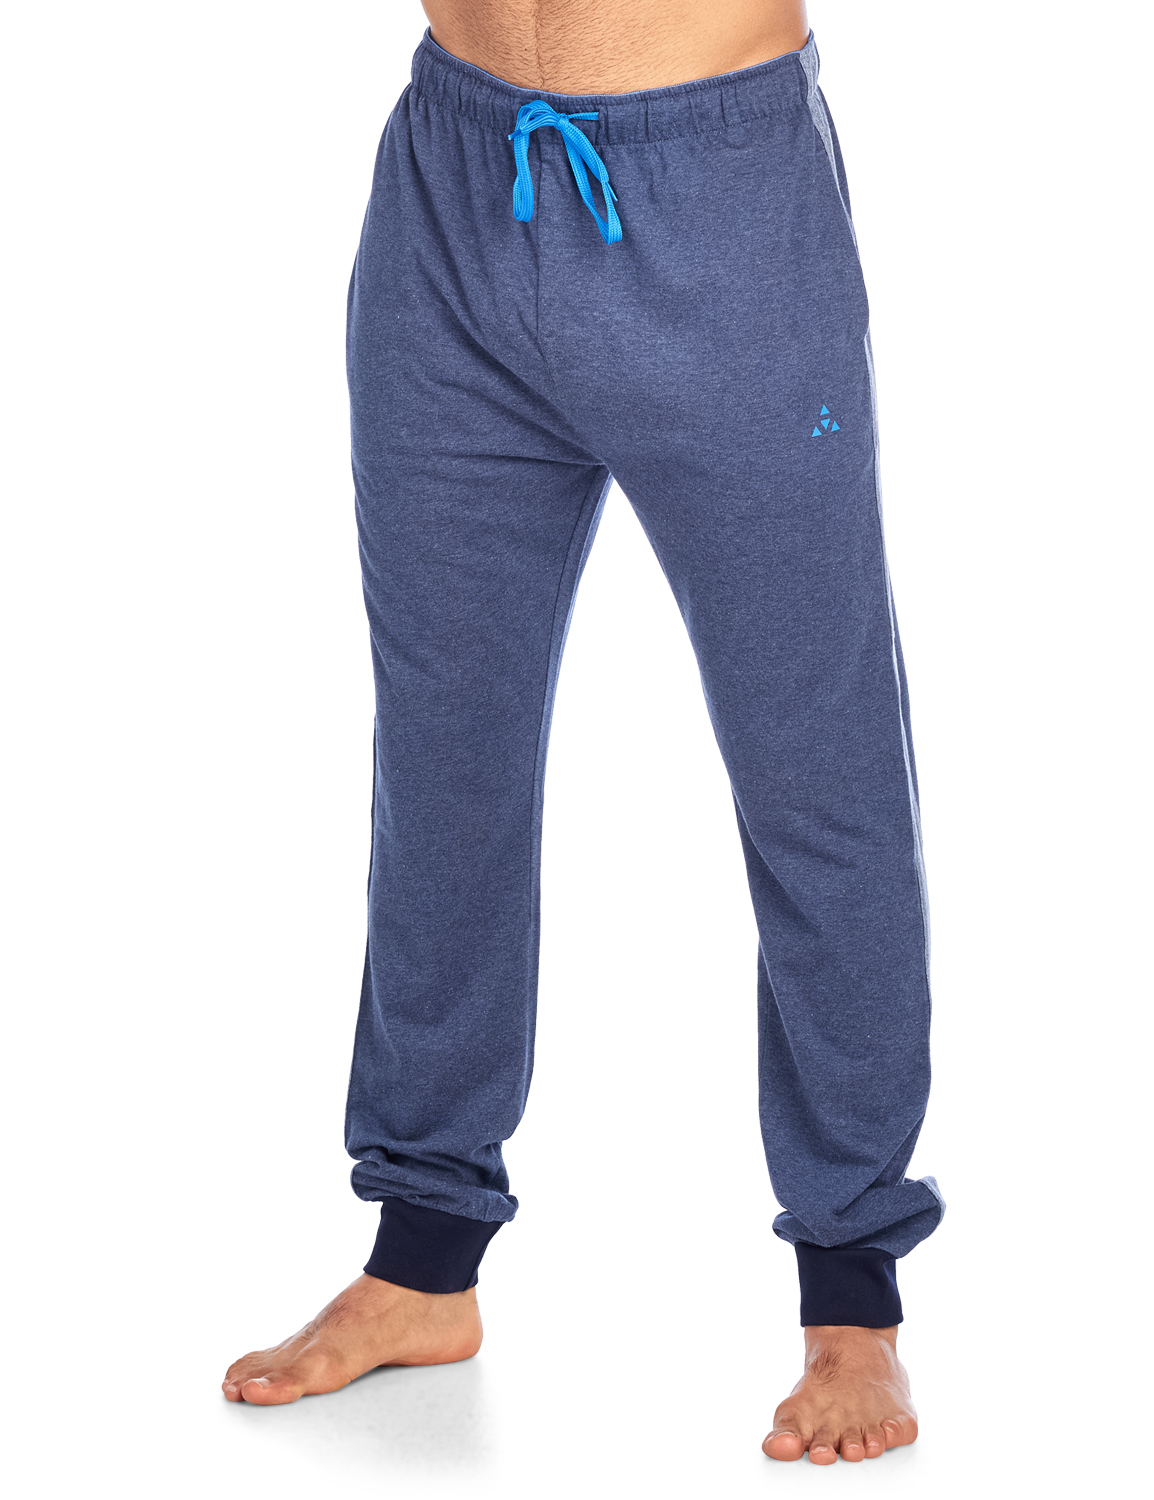 Men's Jersey Knit Joggers & Sweatpants